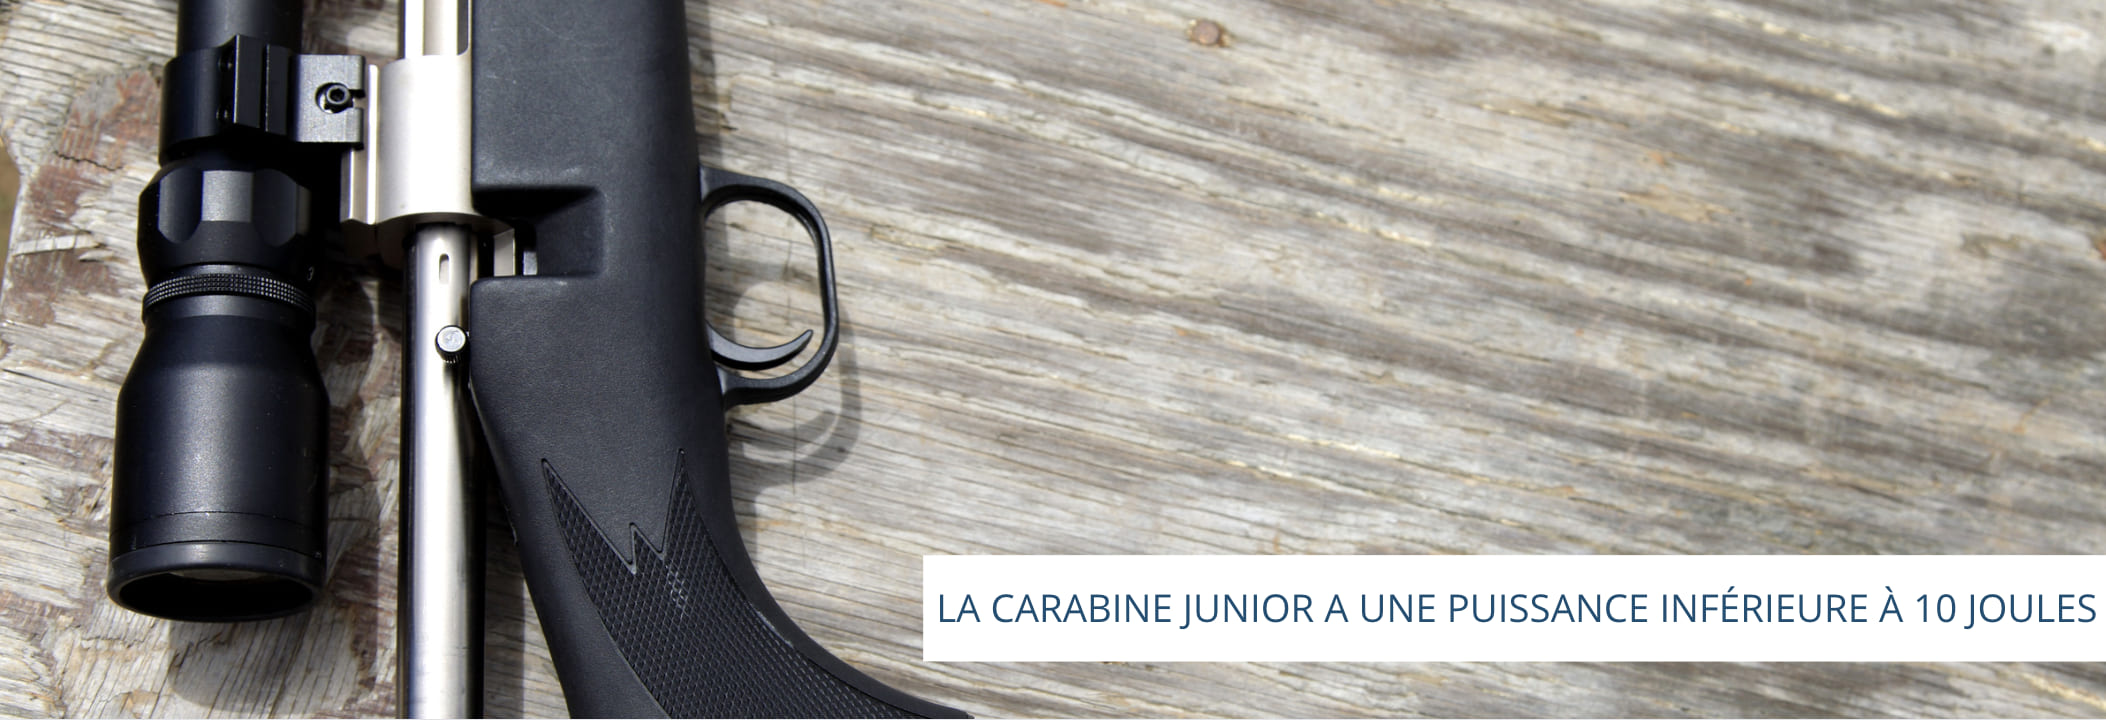 https://www.fusil-calais.com/img/cms/page-cms/carabine-junior-inferieure-a-10-joules.jpg